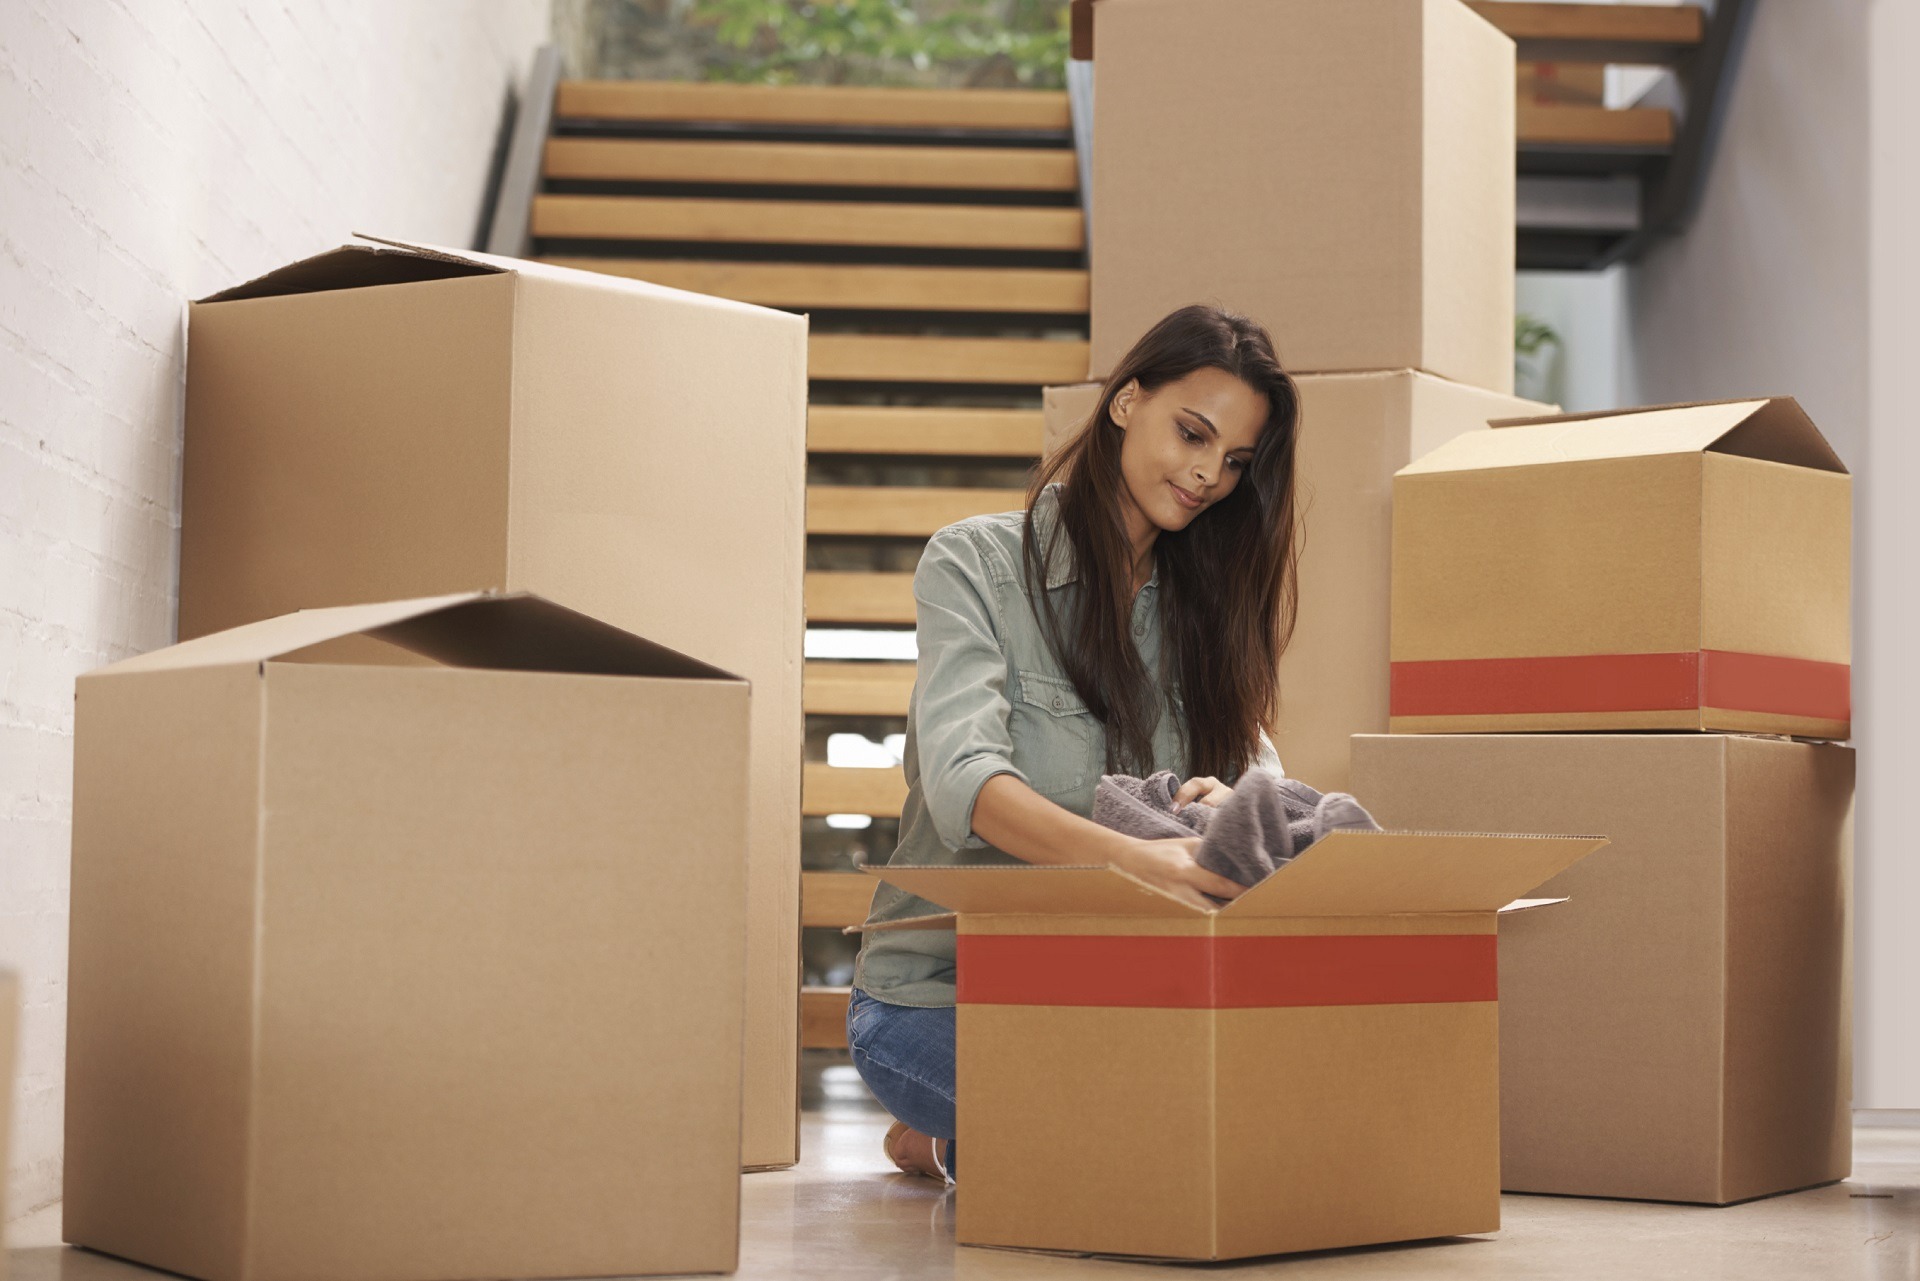 Способы переехать. Женщина с коробками. Коробки для переезда. Коробки в квартире. Коробки с товаром.